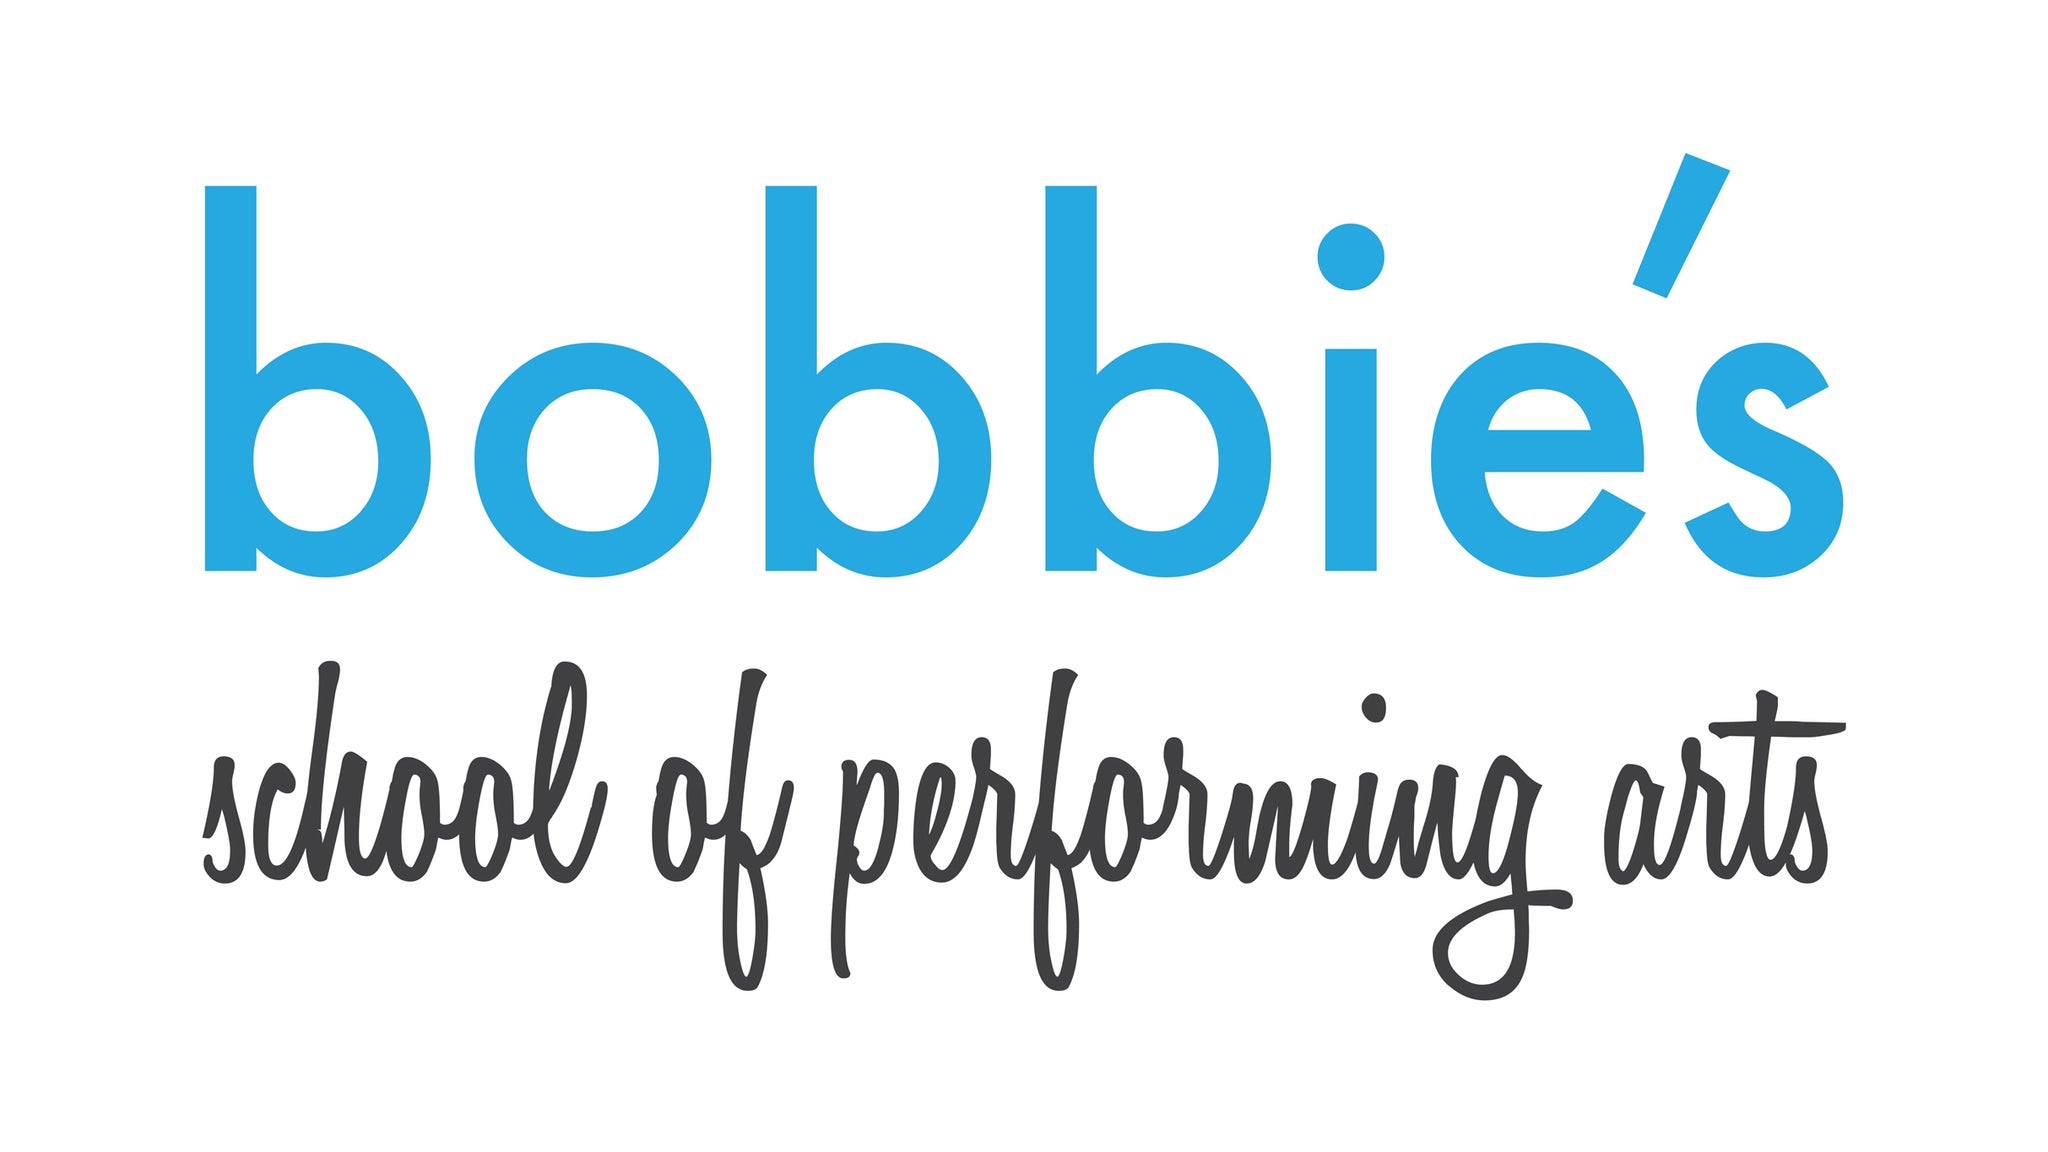 Bobbie's School of Performing Arts